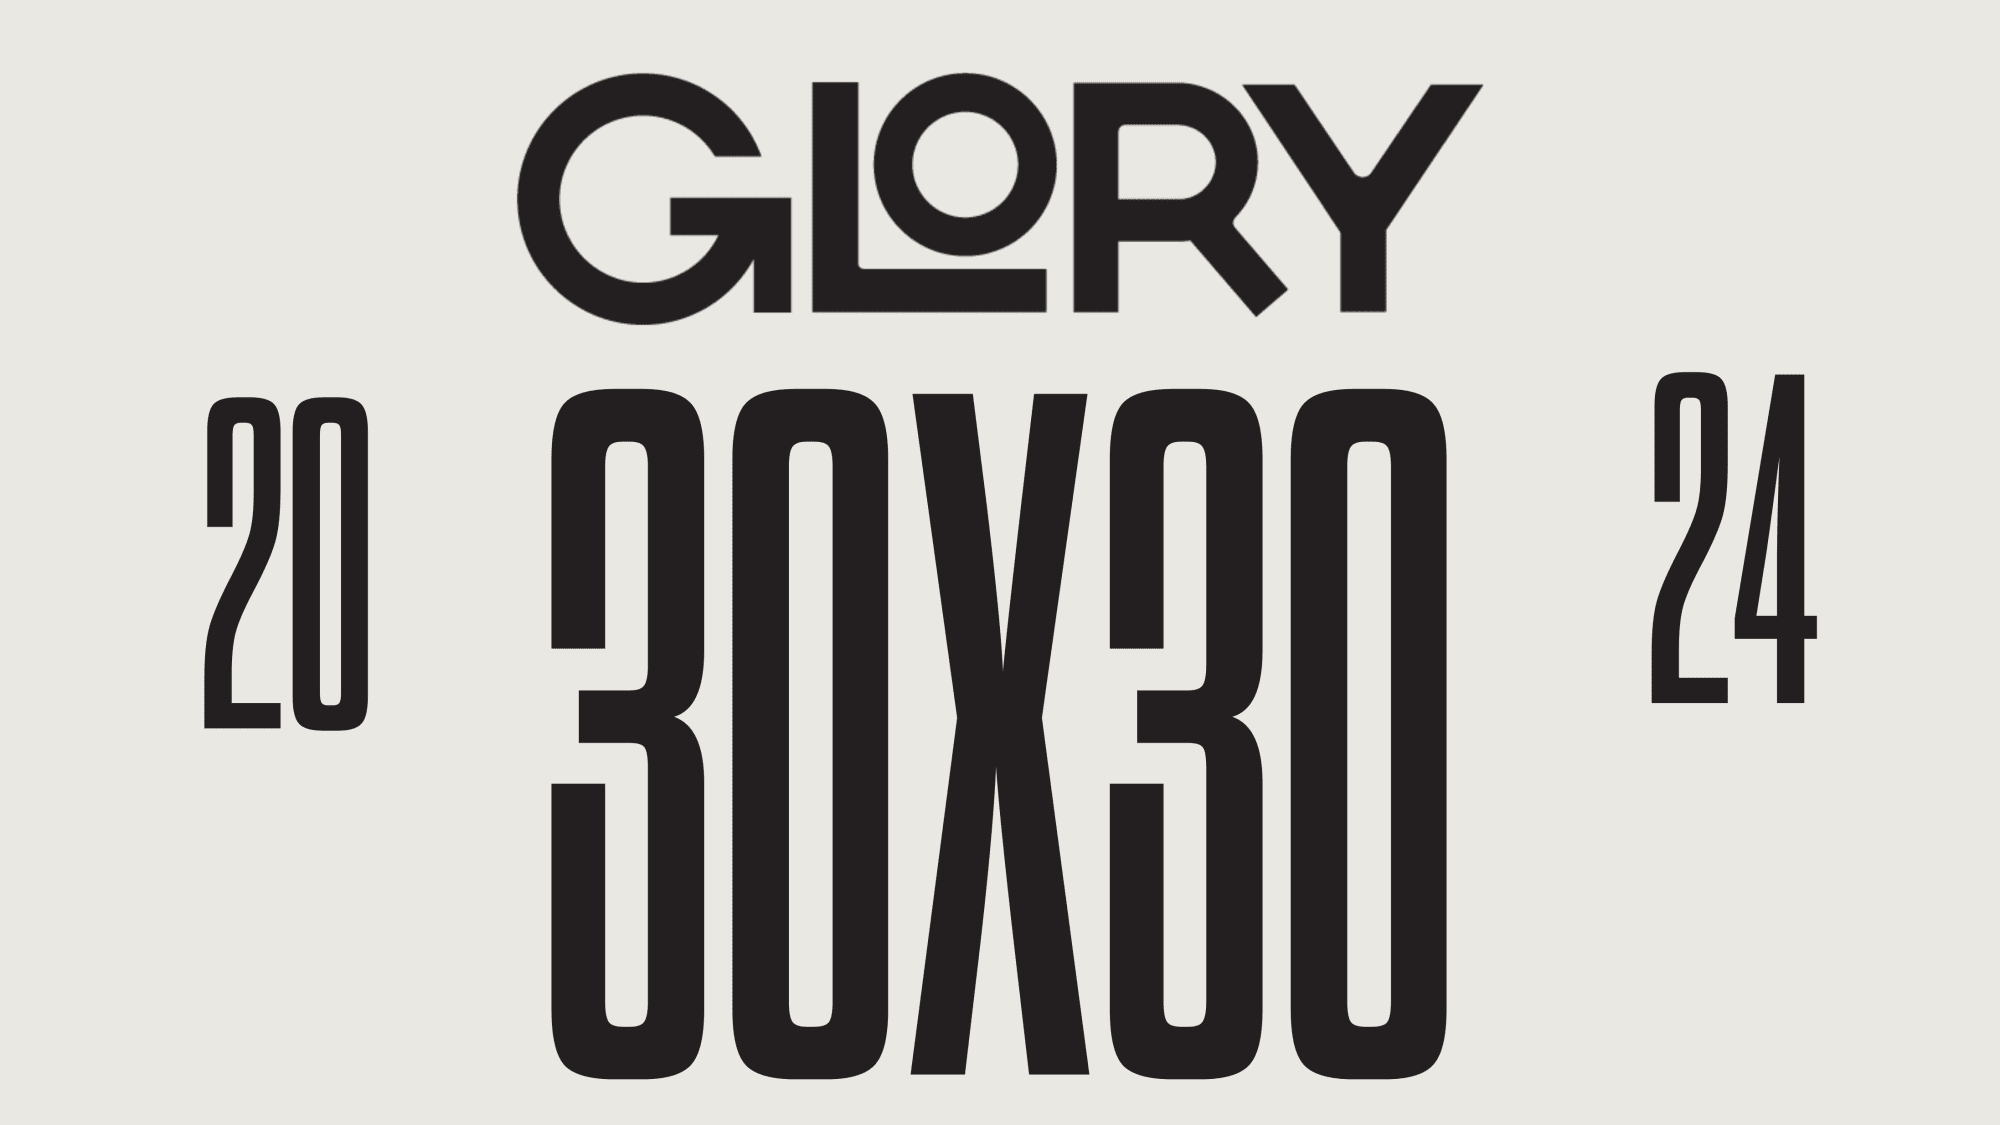 GLORY 30X30: Meet the Class of 2024